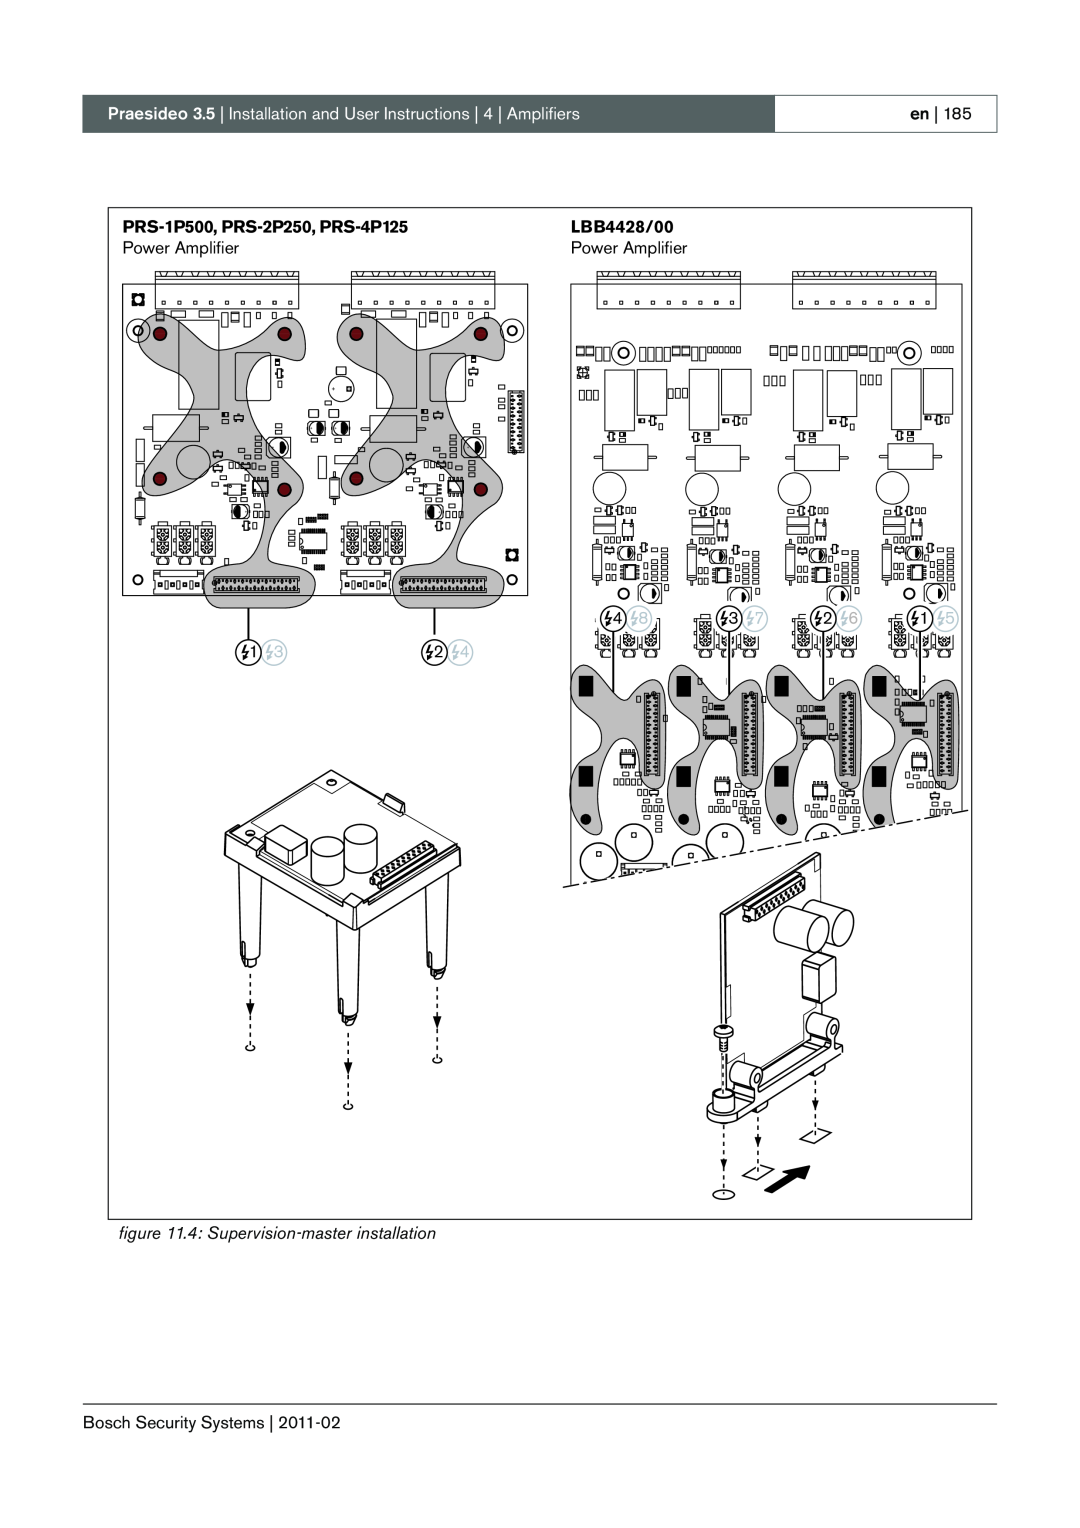 Bosch Appliances 3.5 manual 4: Supervision-masterinstallation, PRS-1P500, PRS-2P250, PRS-4P125 